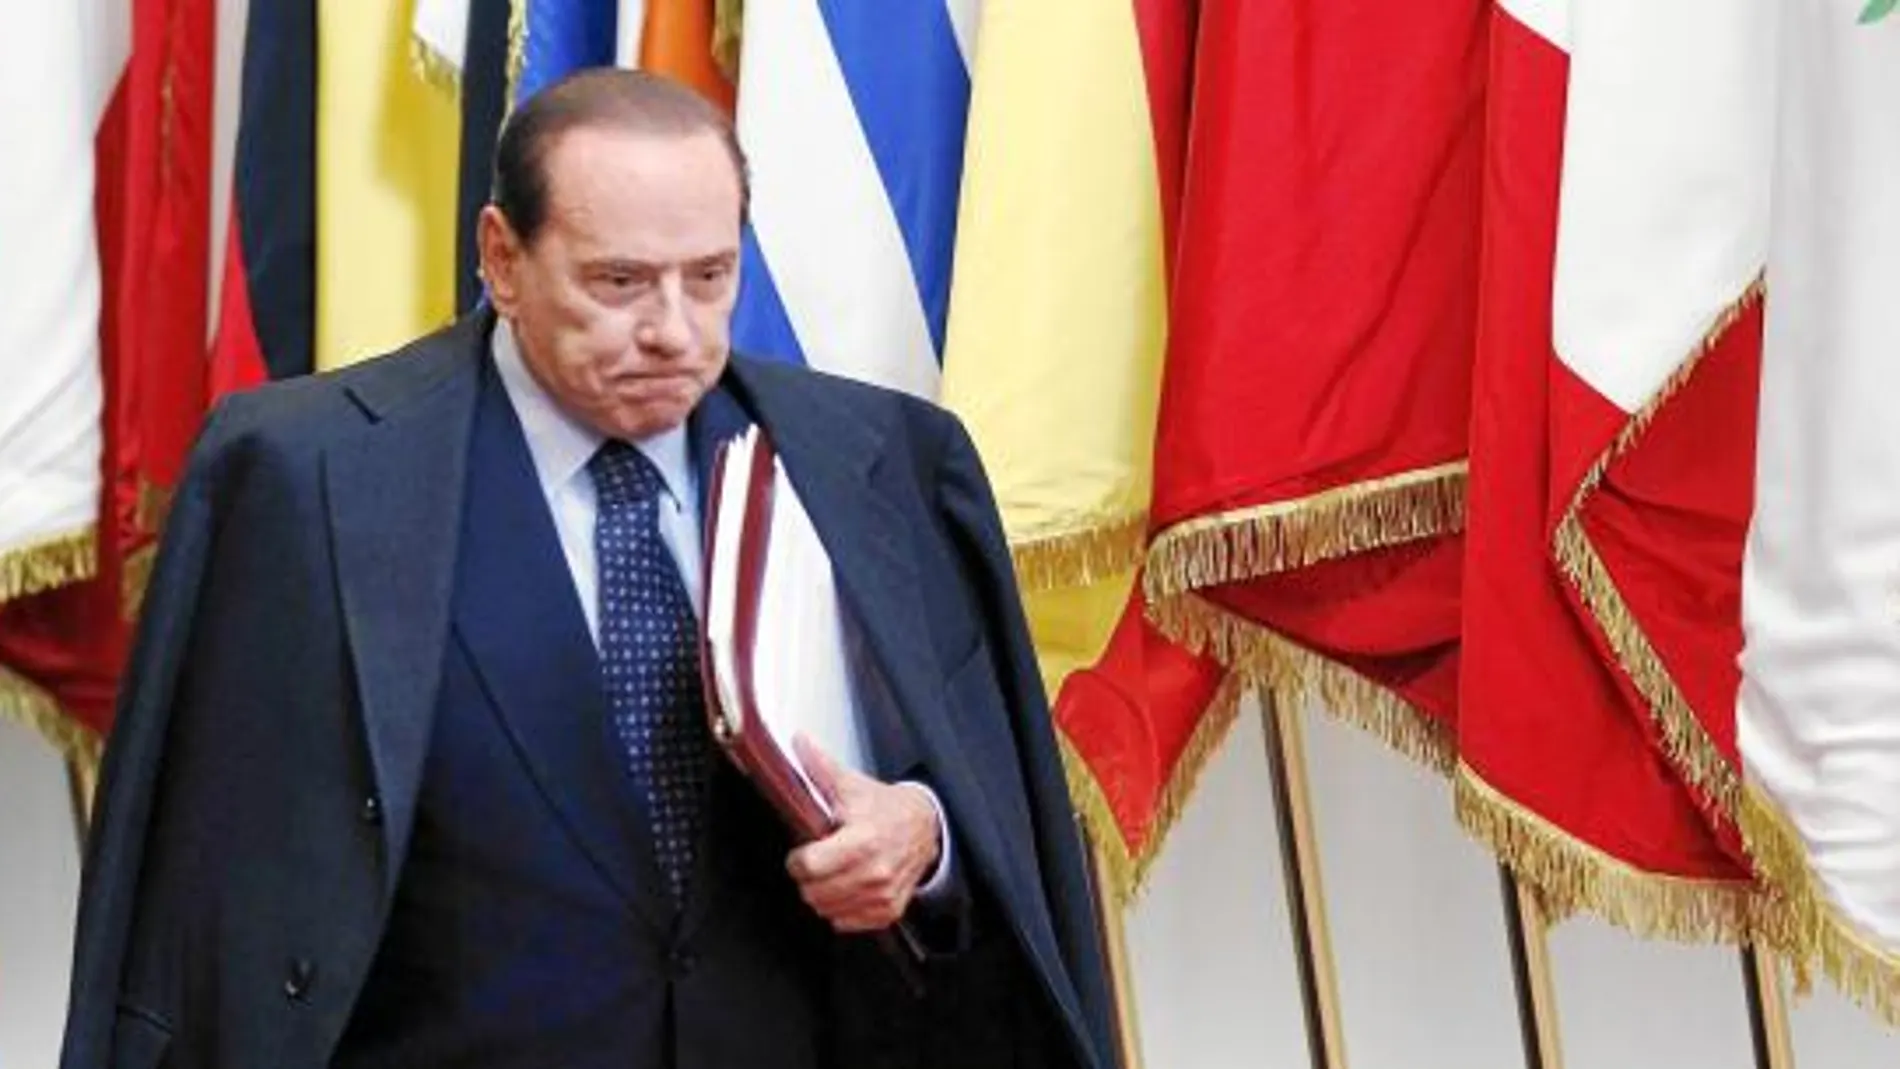 Berlusconi convocó anoche un consejo de ministros extraordinario